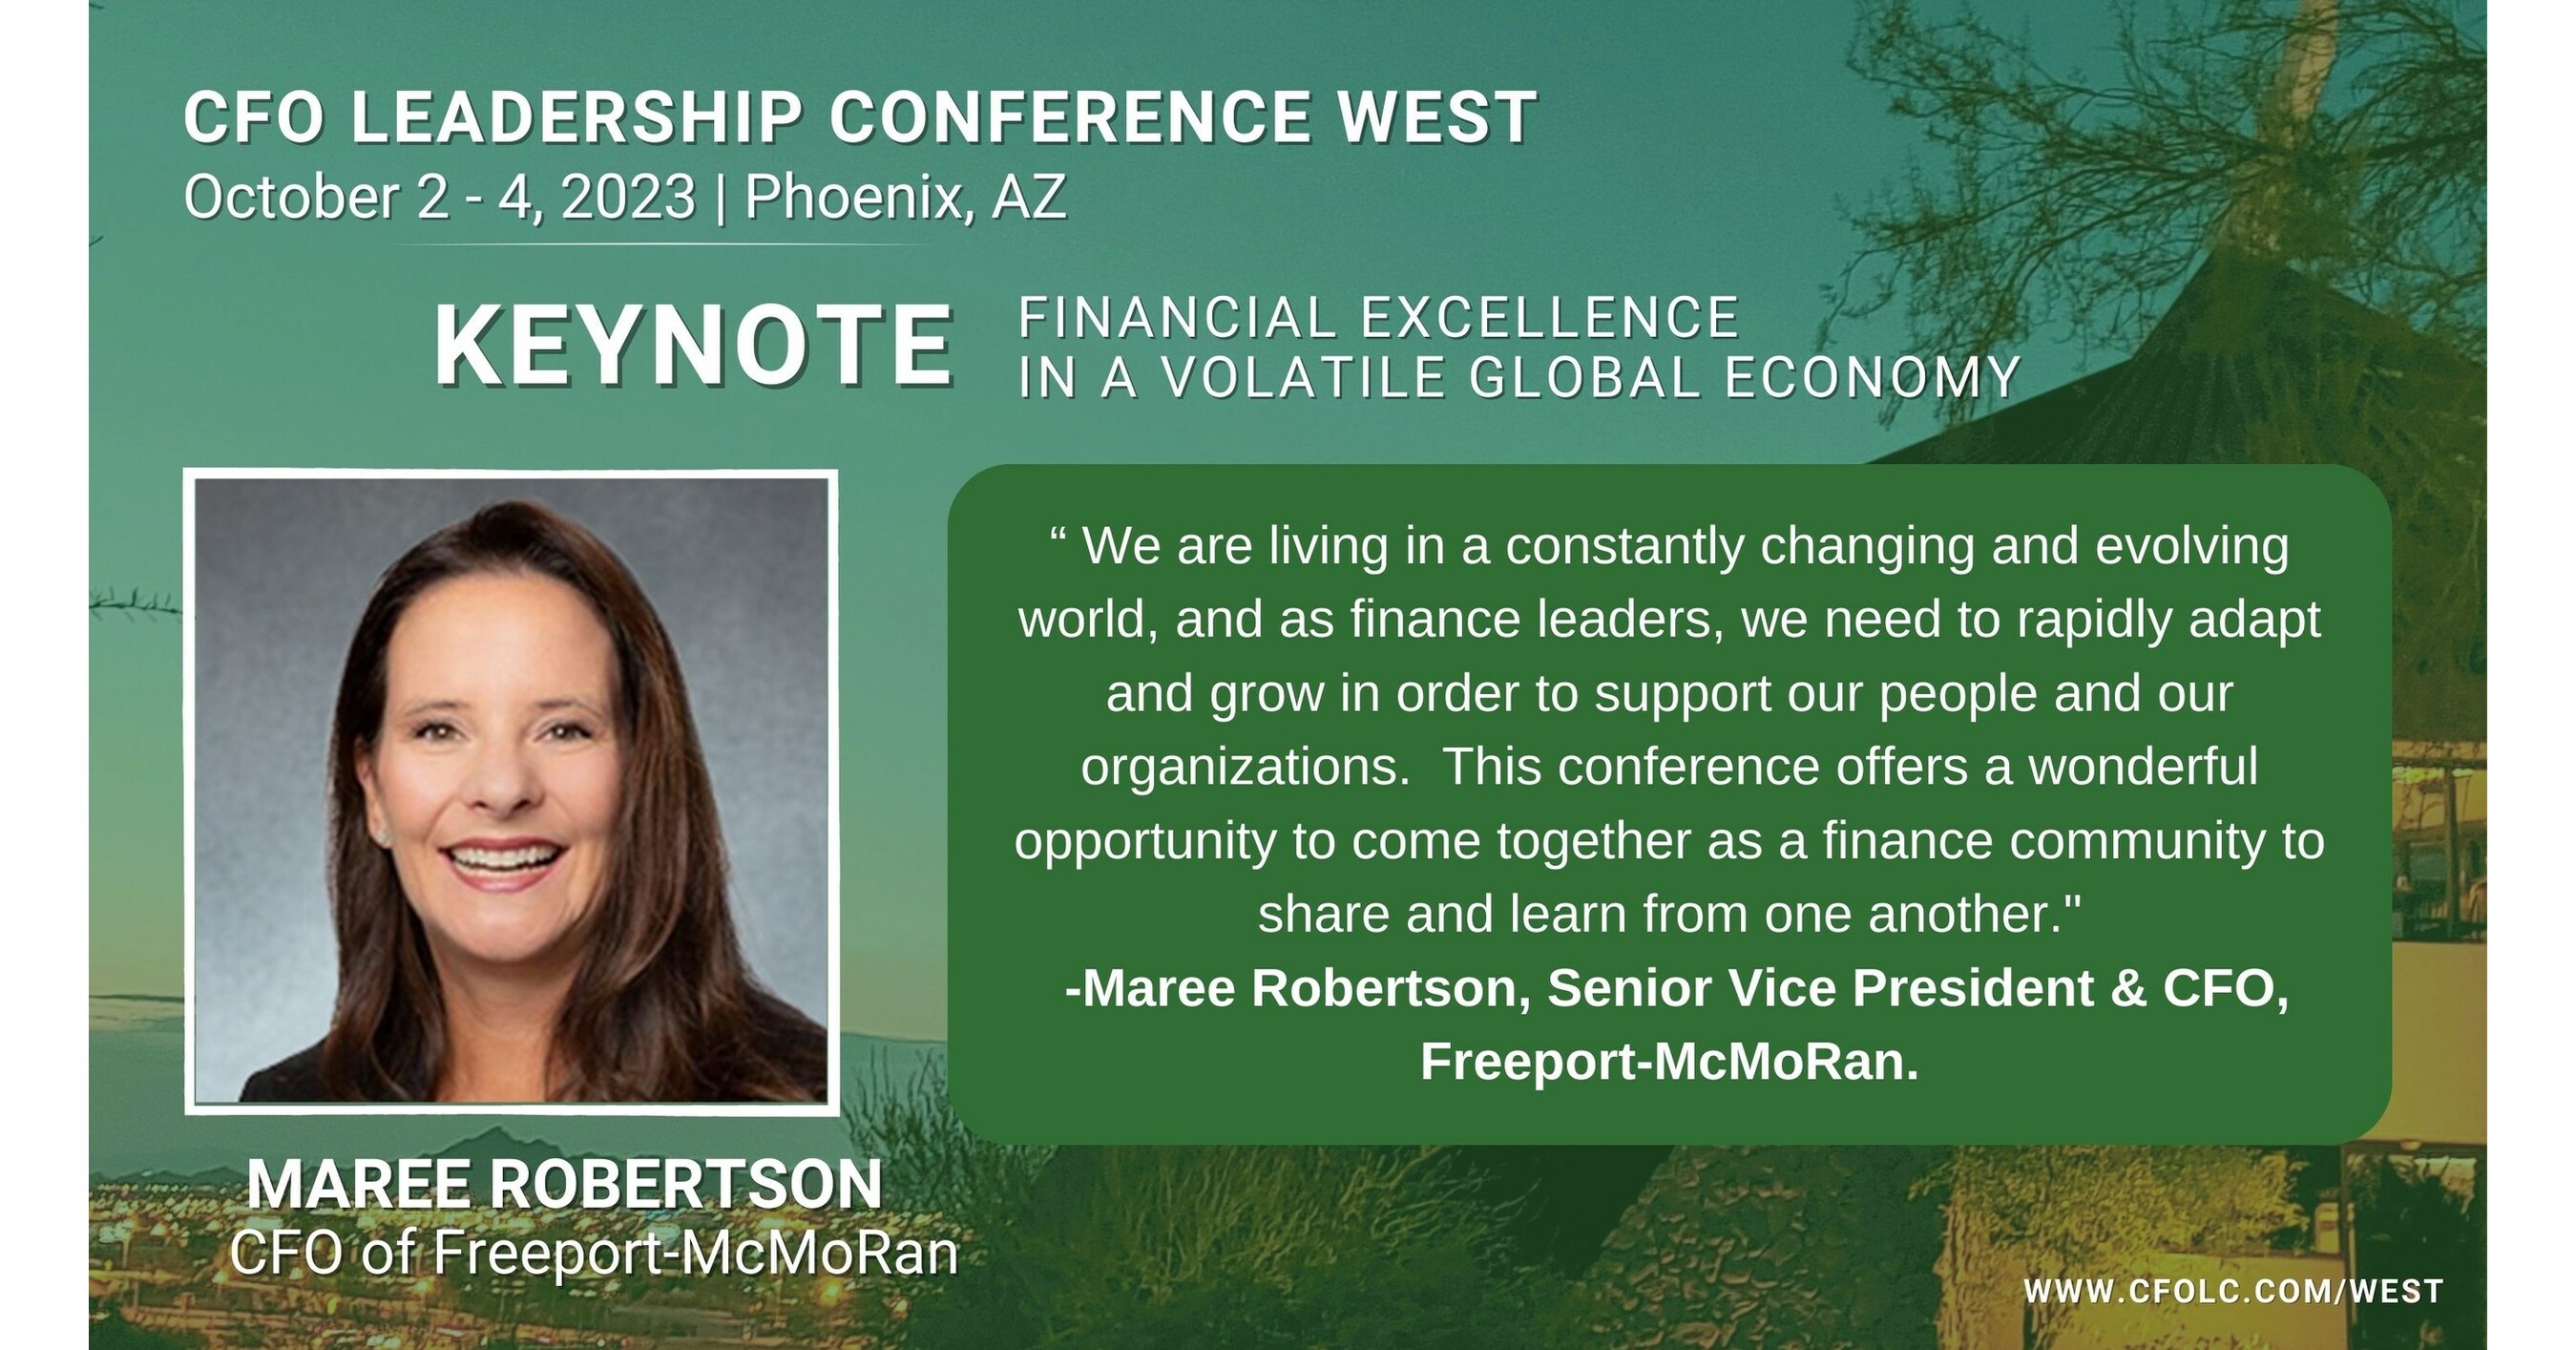 Maree Robertson, CFO of FreeportMcMoRan, To Share Insights at CFO